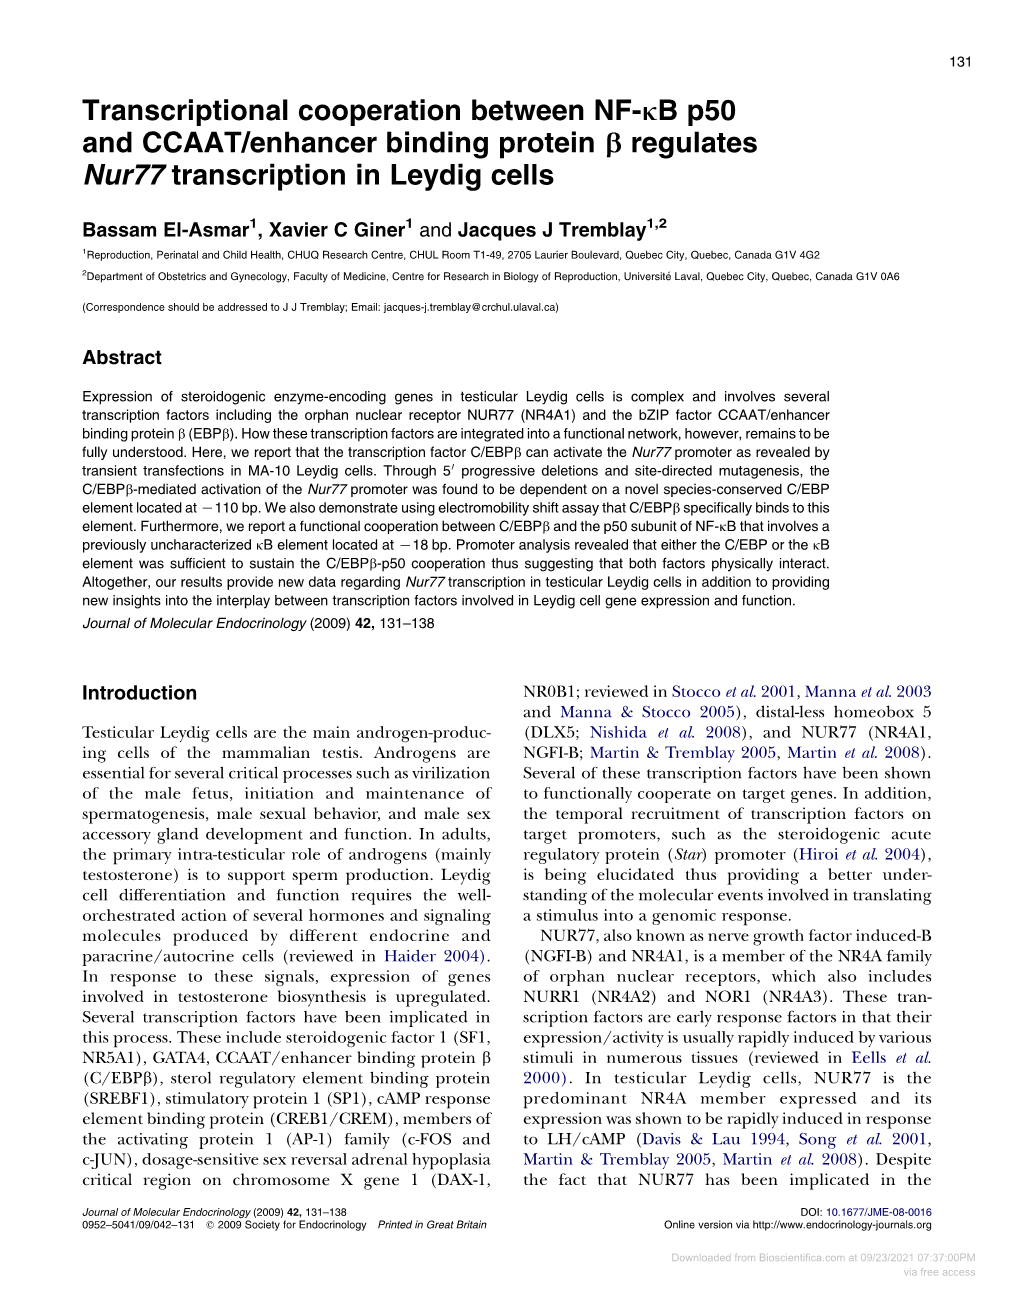 Transcriptional Cooperation Between NF-Kb P50 and CCAAT/Enhancer Binding Protein B Regulates Nur77 Transcription in Leydig Cells